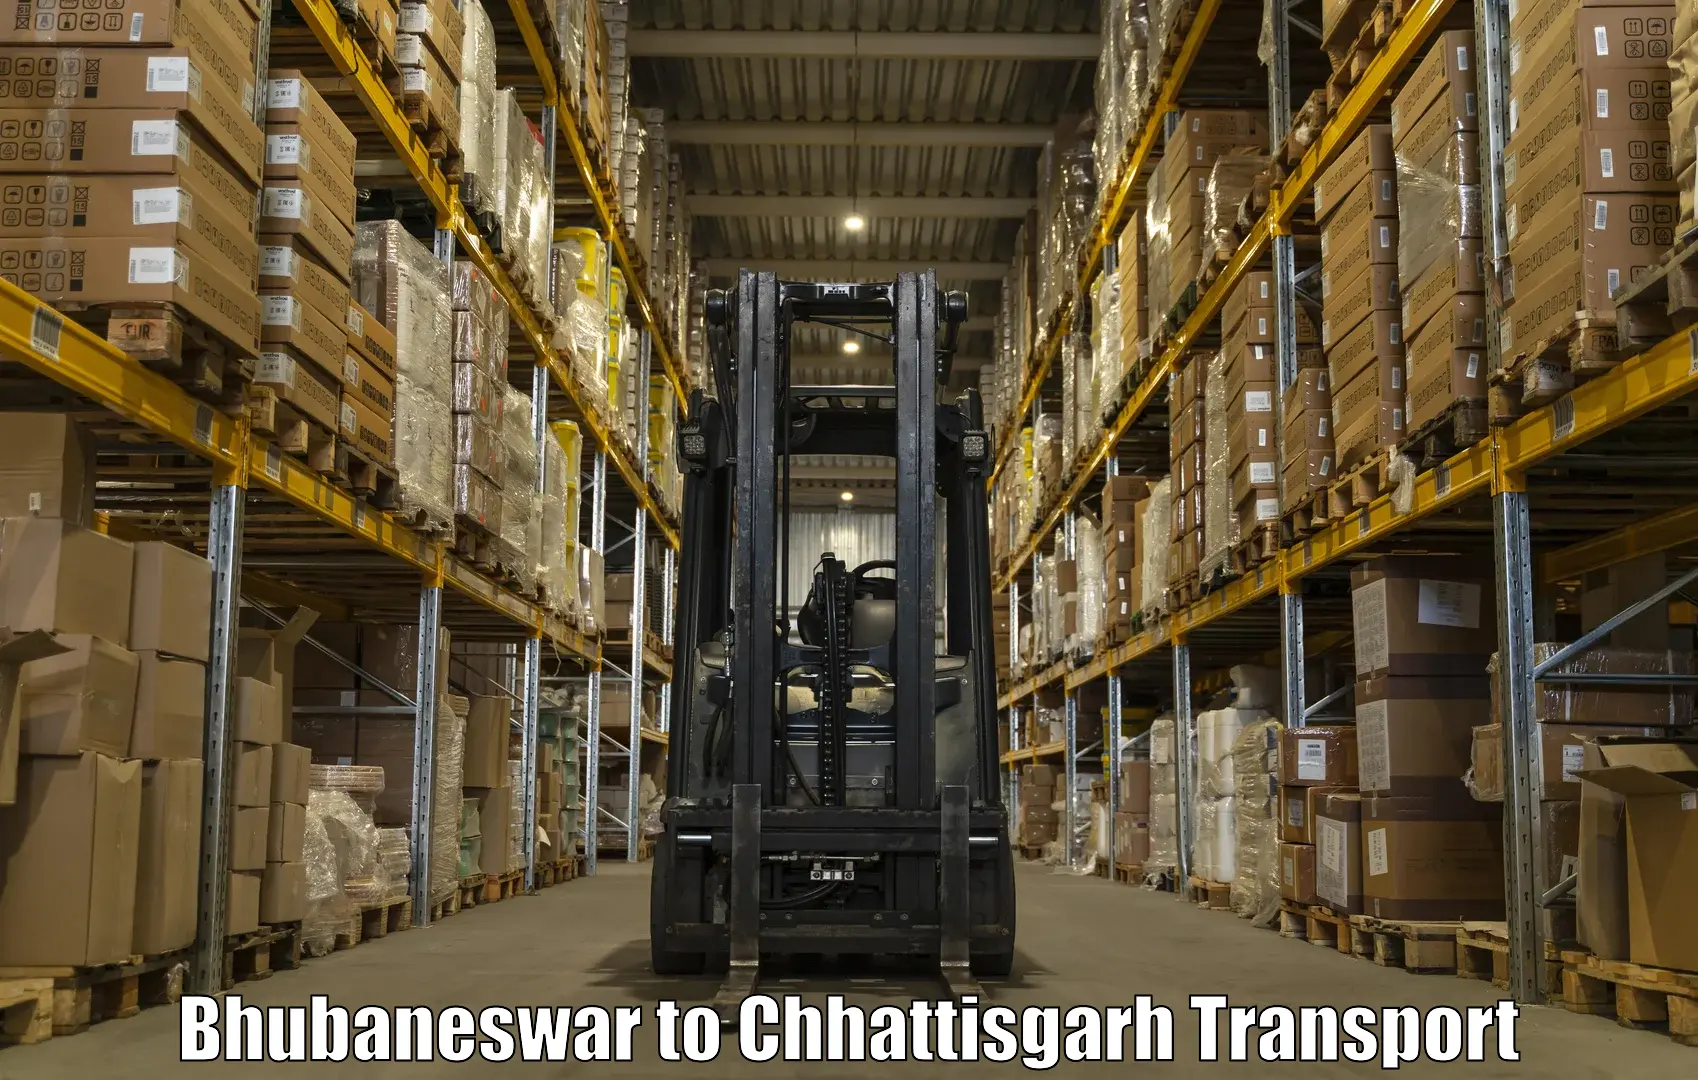 Truck transport companies in India Bhubaneswar to Bhilai